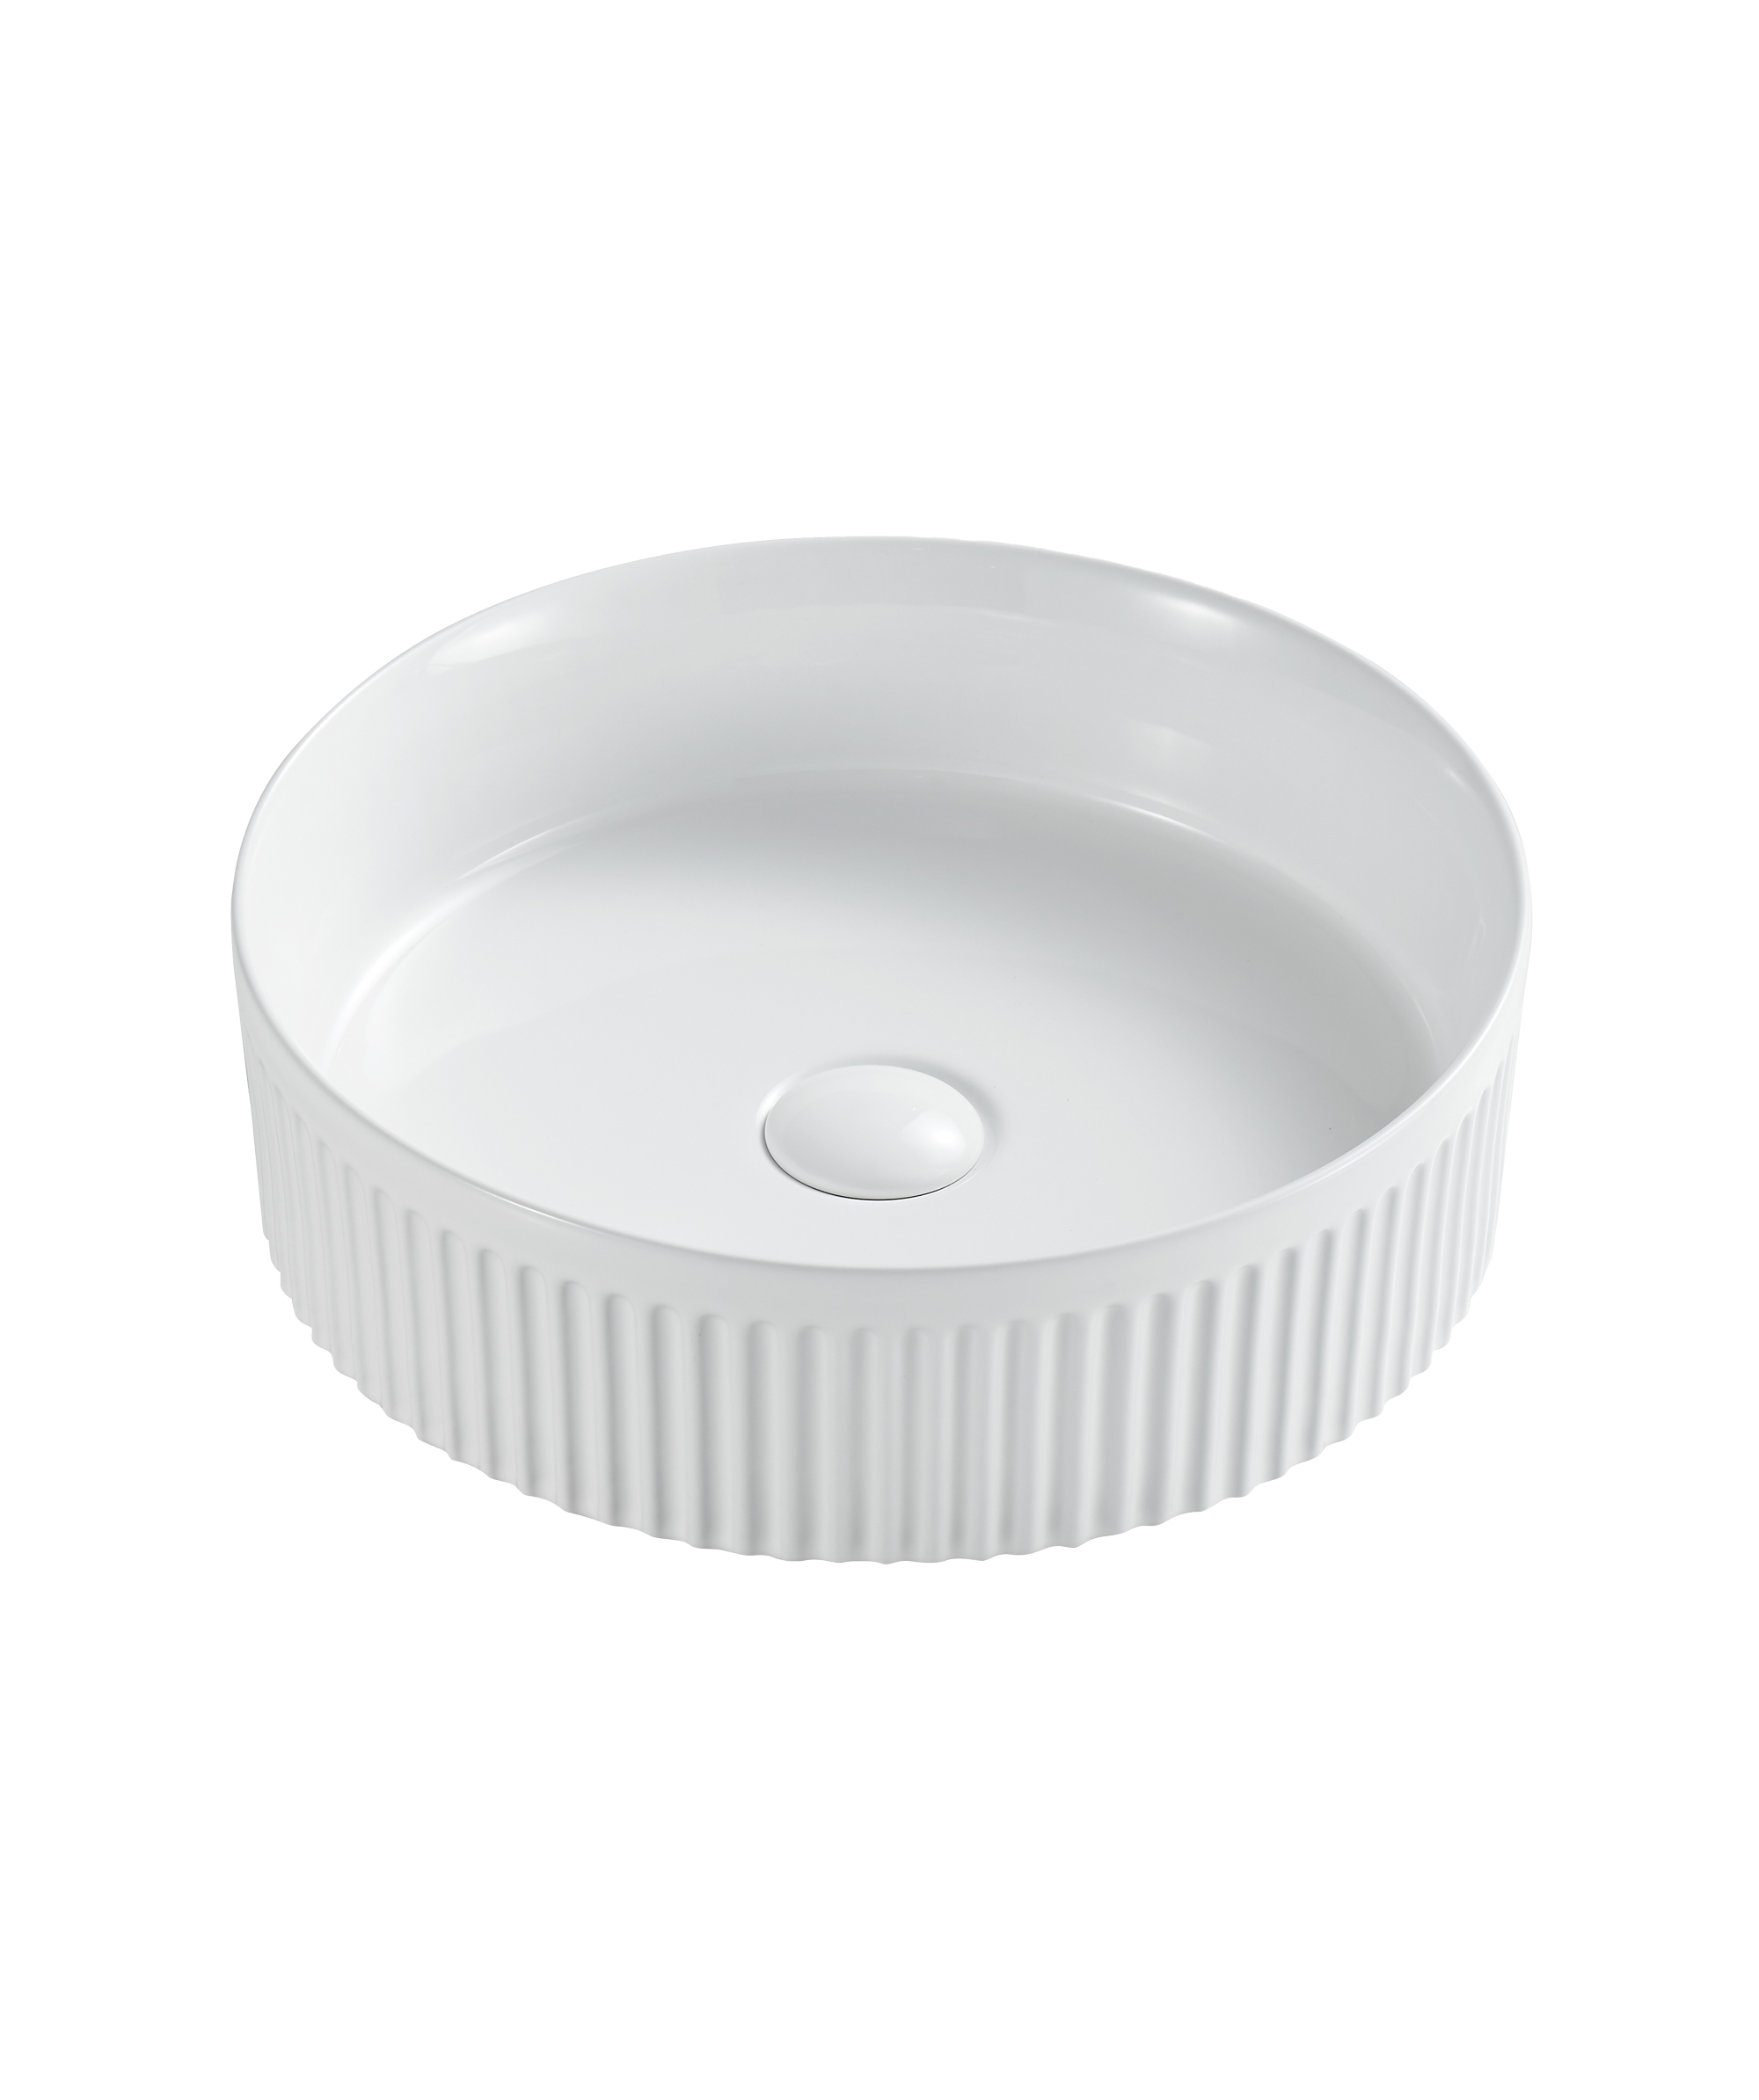 Cleo 400 ceramic basin - White Gloss